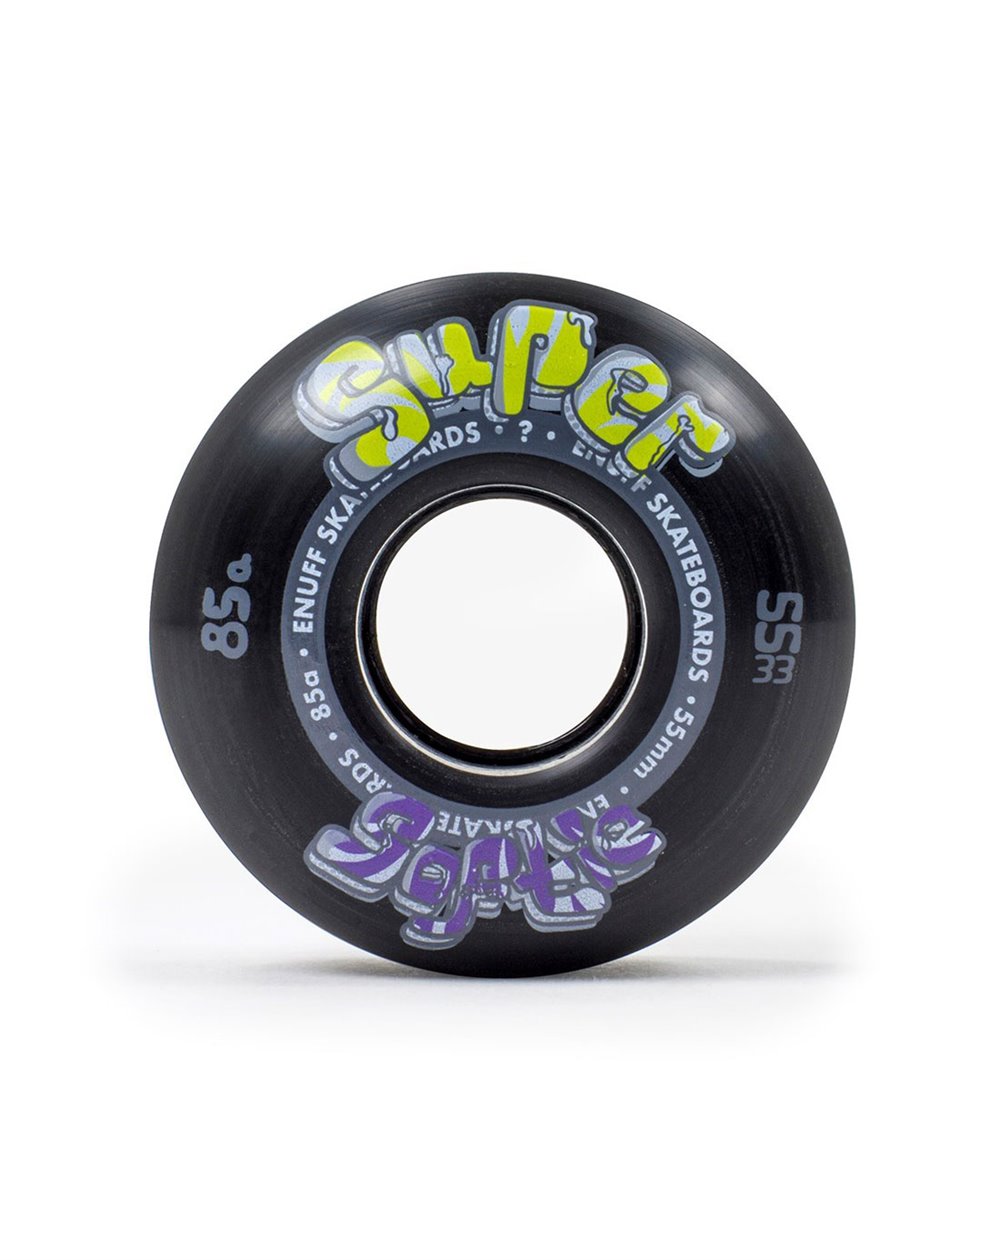 Enuff Roues Skateboard Super Softie 55mm 85A Black 4 pc